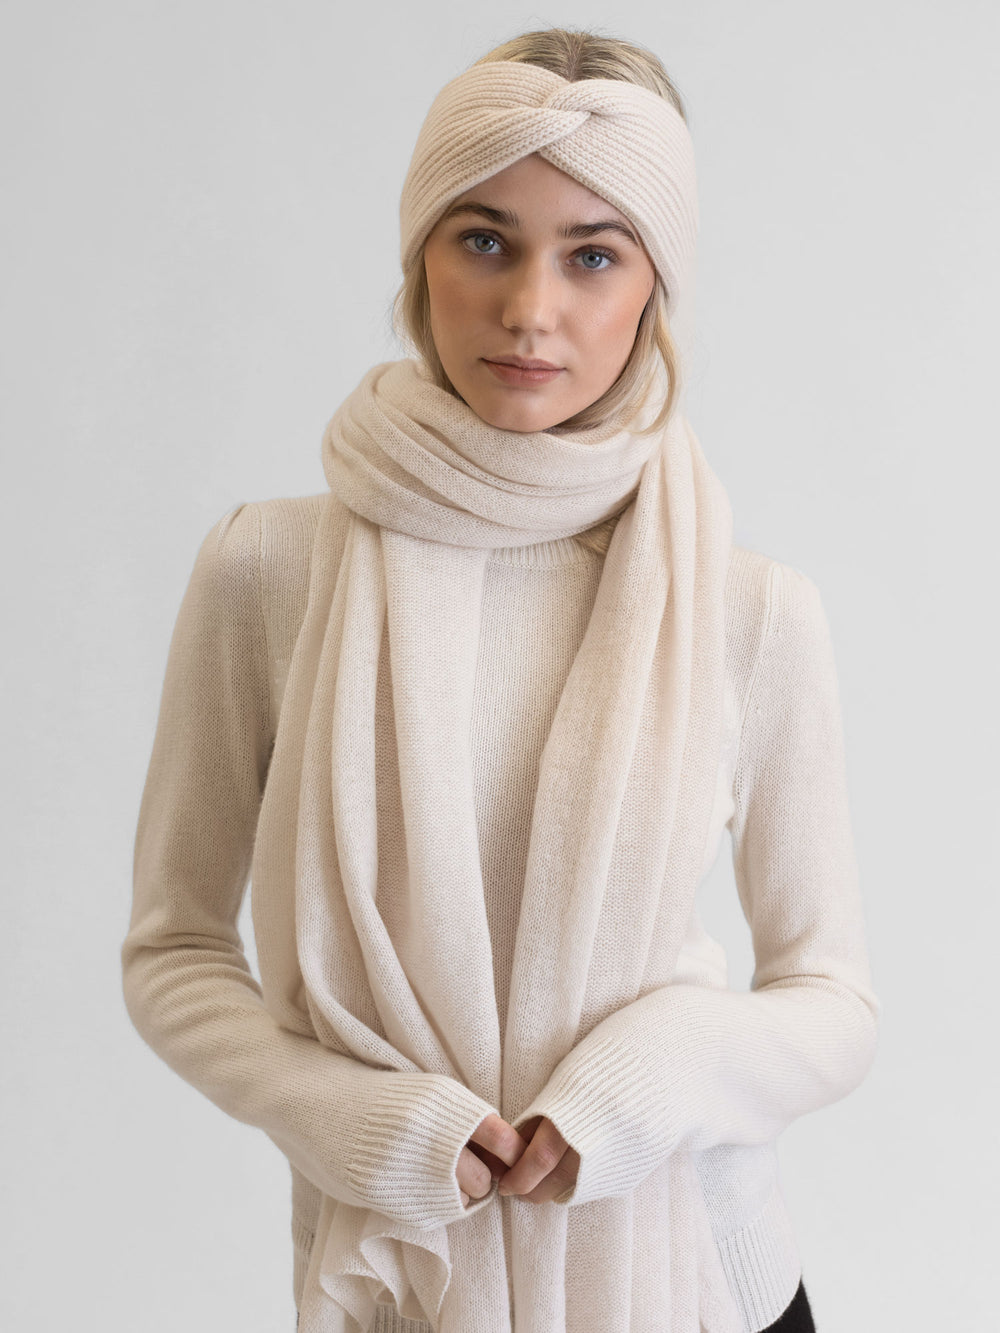 Pearl colored cashmere head band Freya. 100% cashmere. Scandinavian design from Kashmina